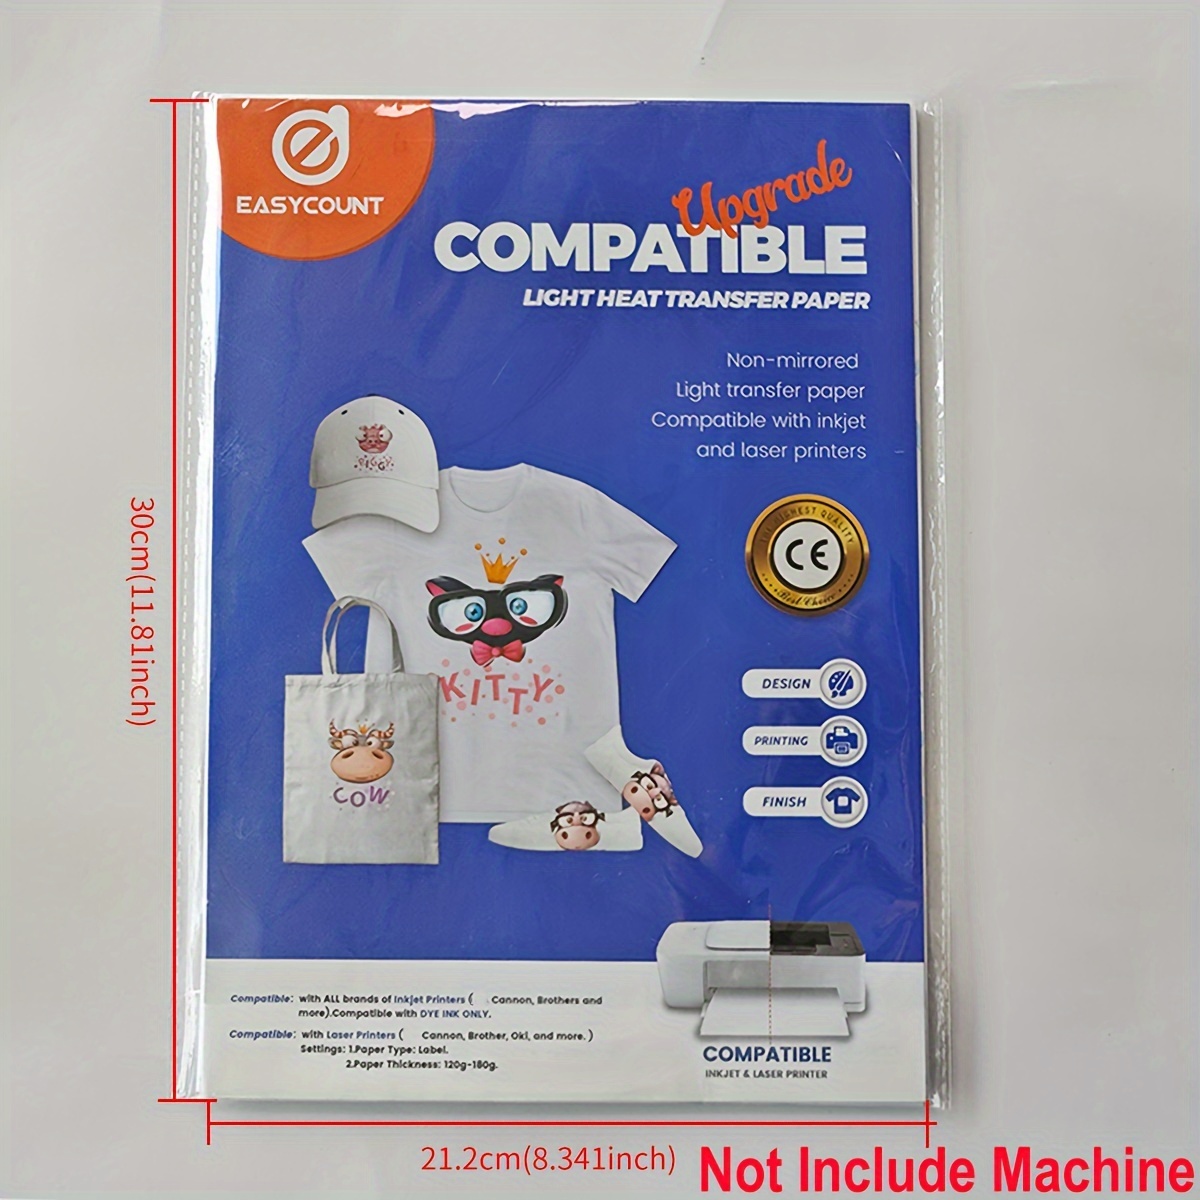 Heat Press Machine - Easy Heat Press Printing Machine 7 x 3.8